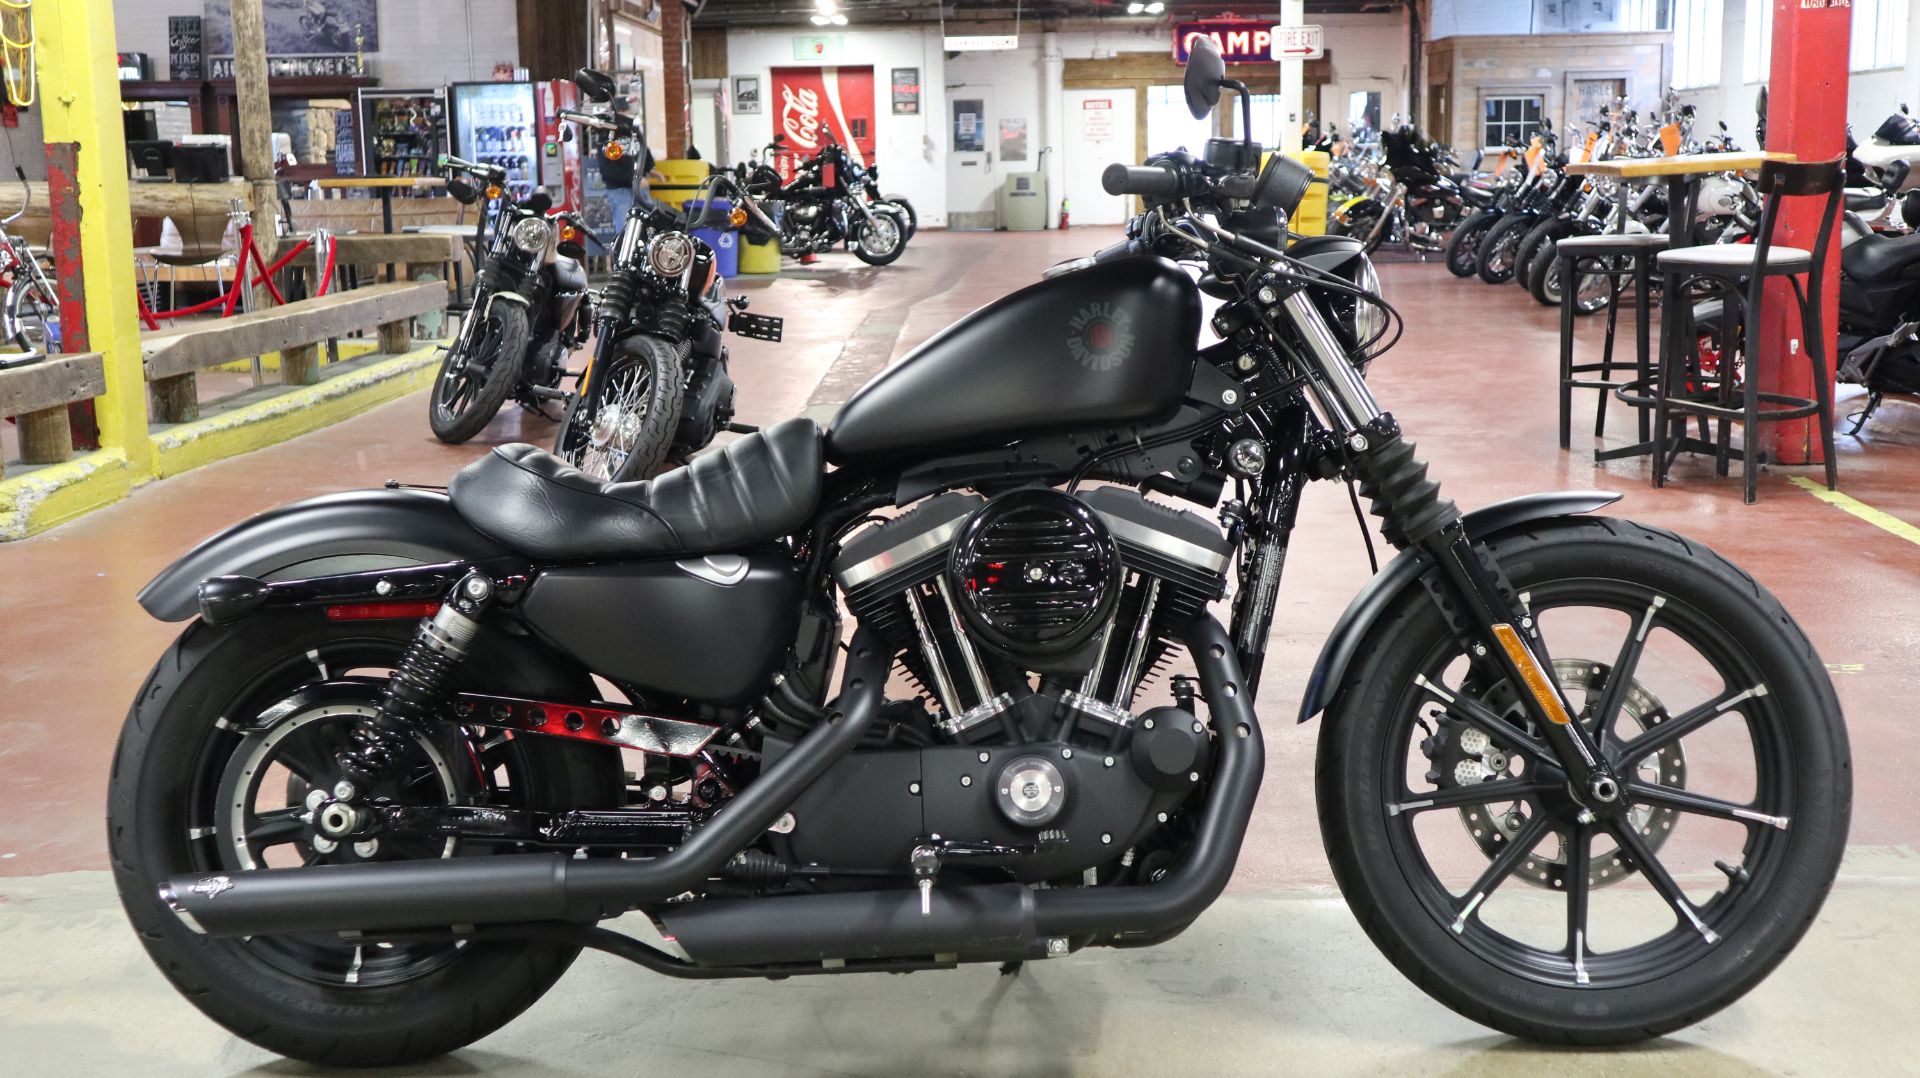 2021 Harley-Davidson Iron 883™ in New London, Connecticut - Photo 1